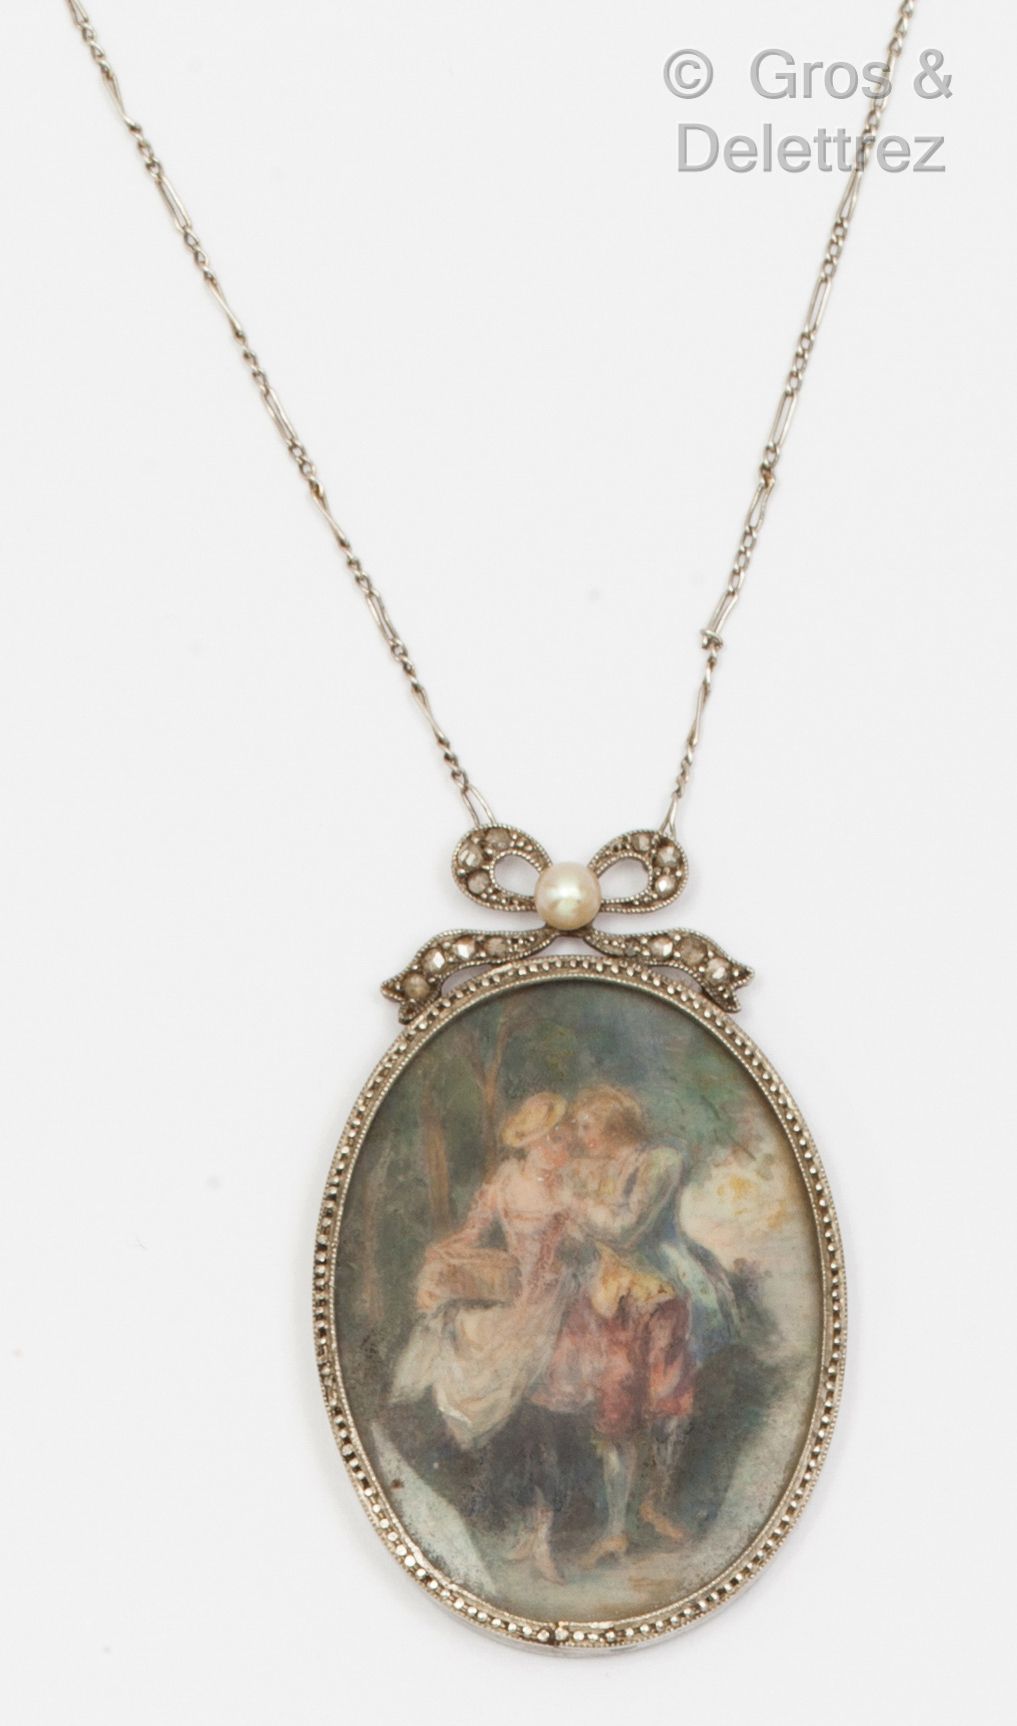 Null 一条白金项链，珍珠母贝上绘有描绘浪漫场景的微型画，顶部是一个镶嵌有珍珠和玫瑰式切割钻石的蝴蝶结。毛重：8克。